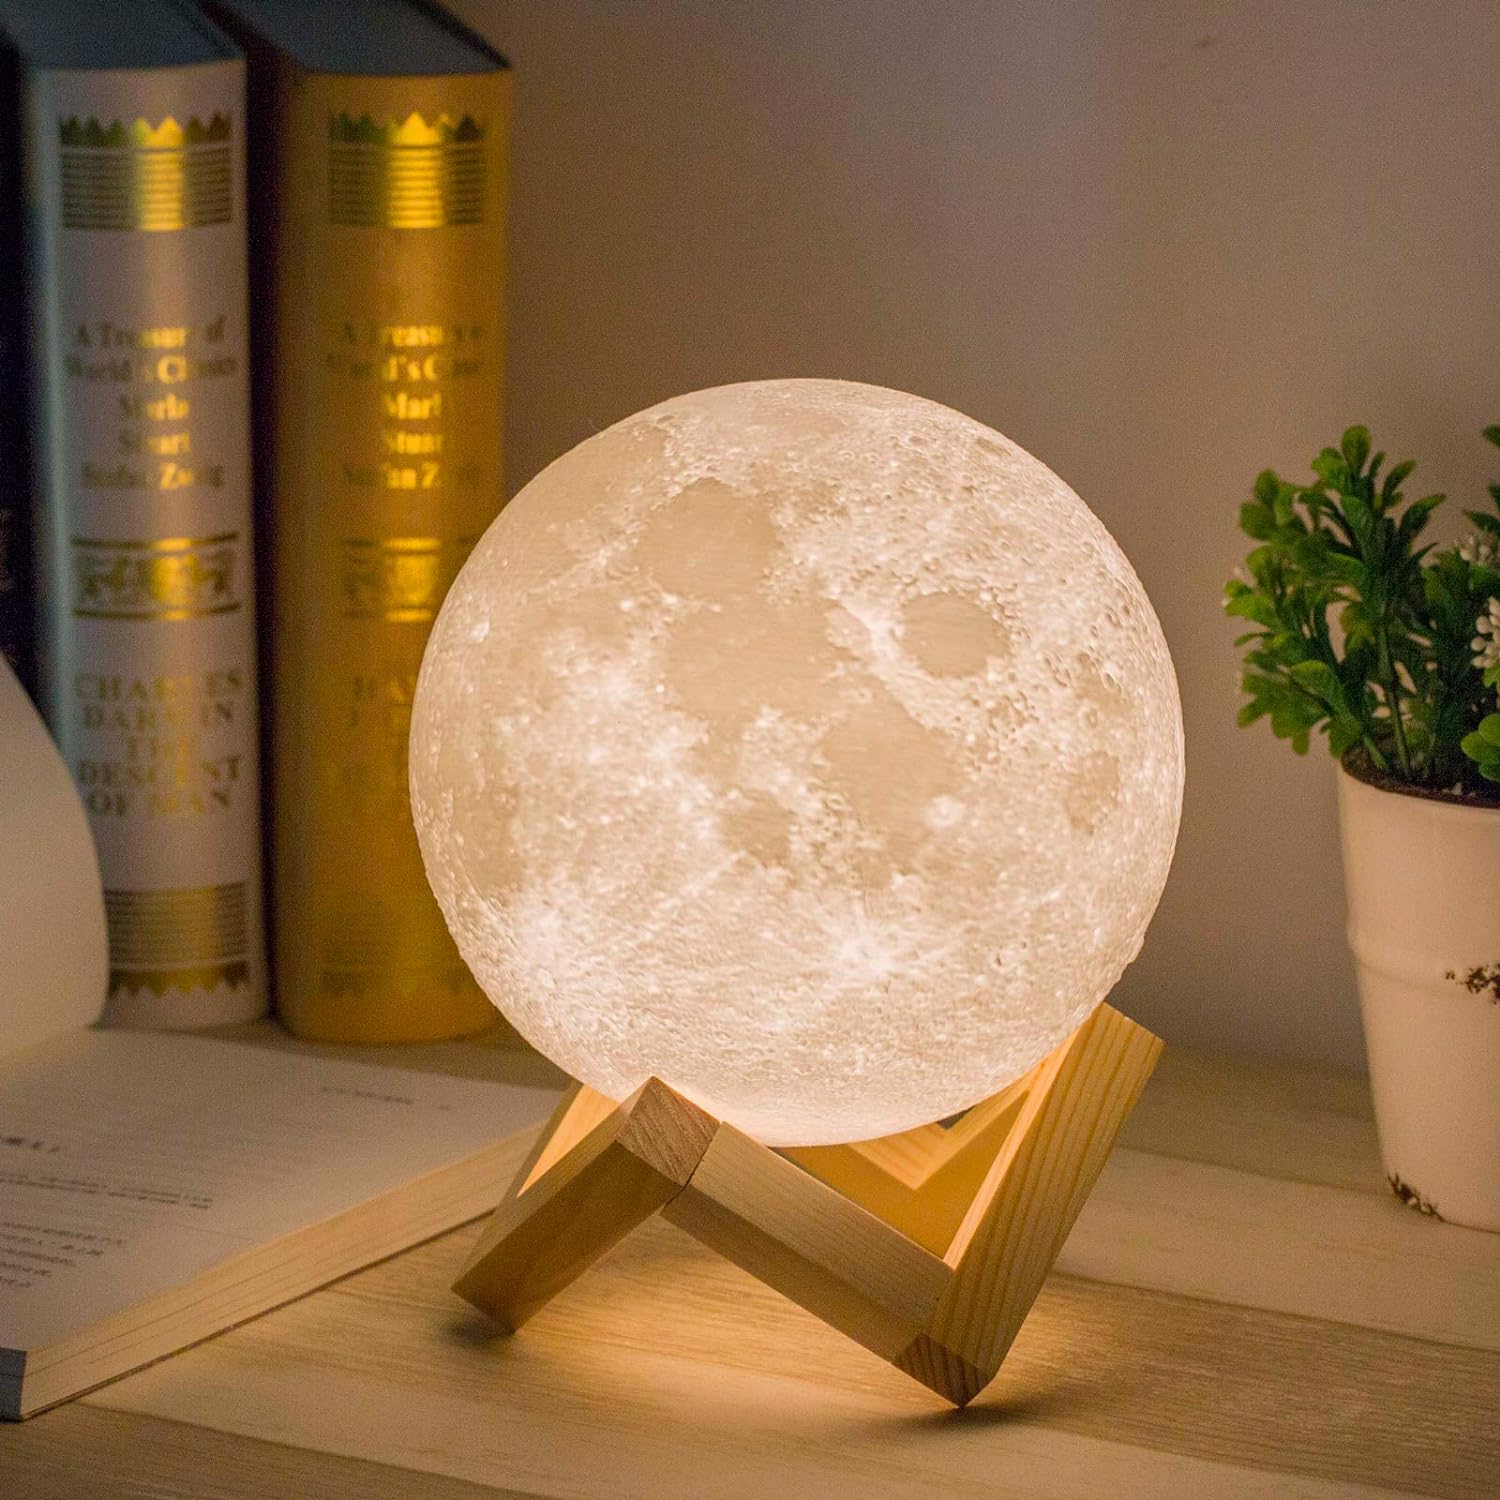 Mobile Moon Lamp